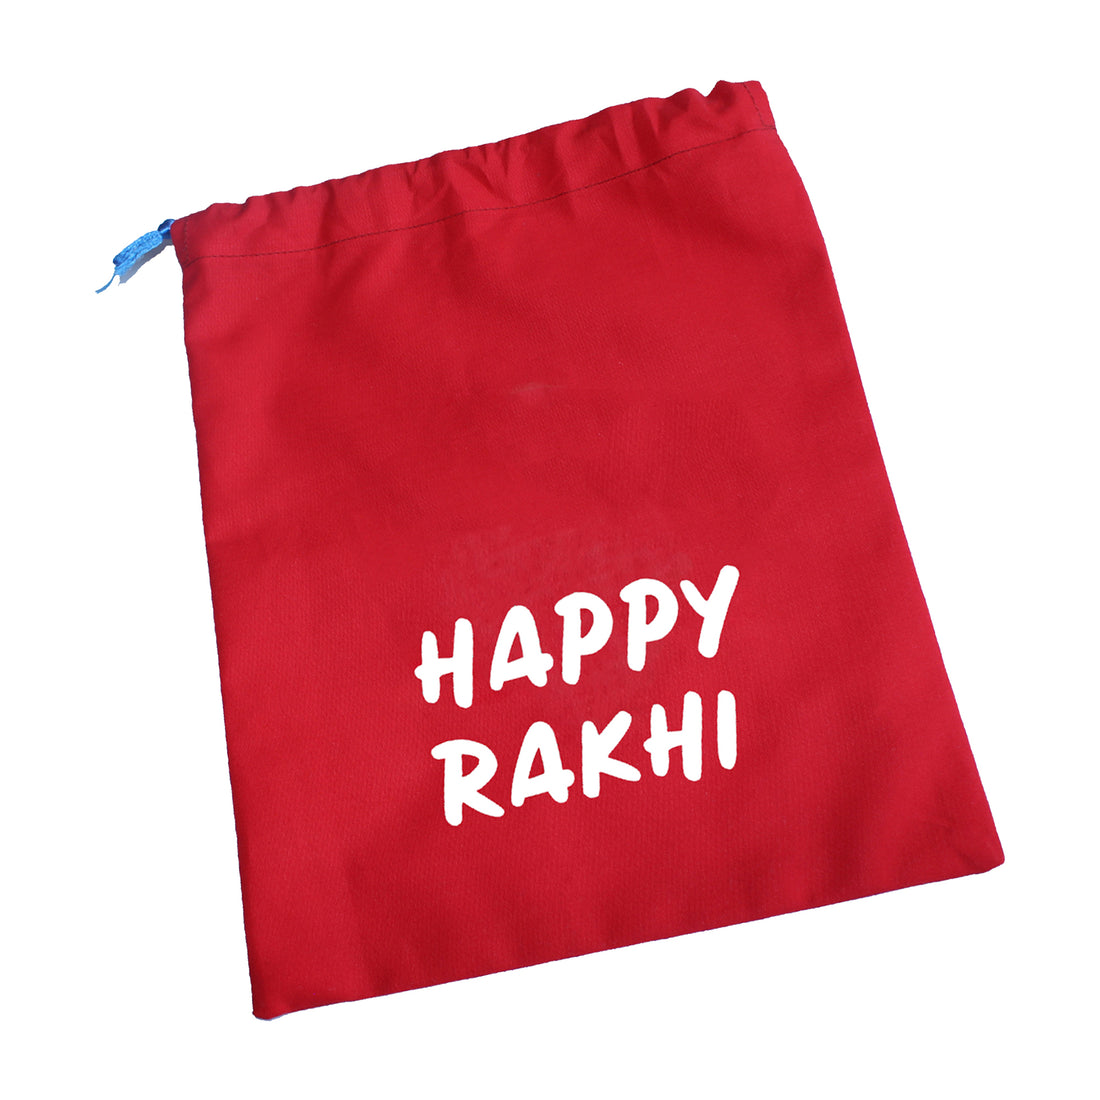 Rakhi Gift Brother